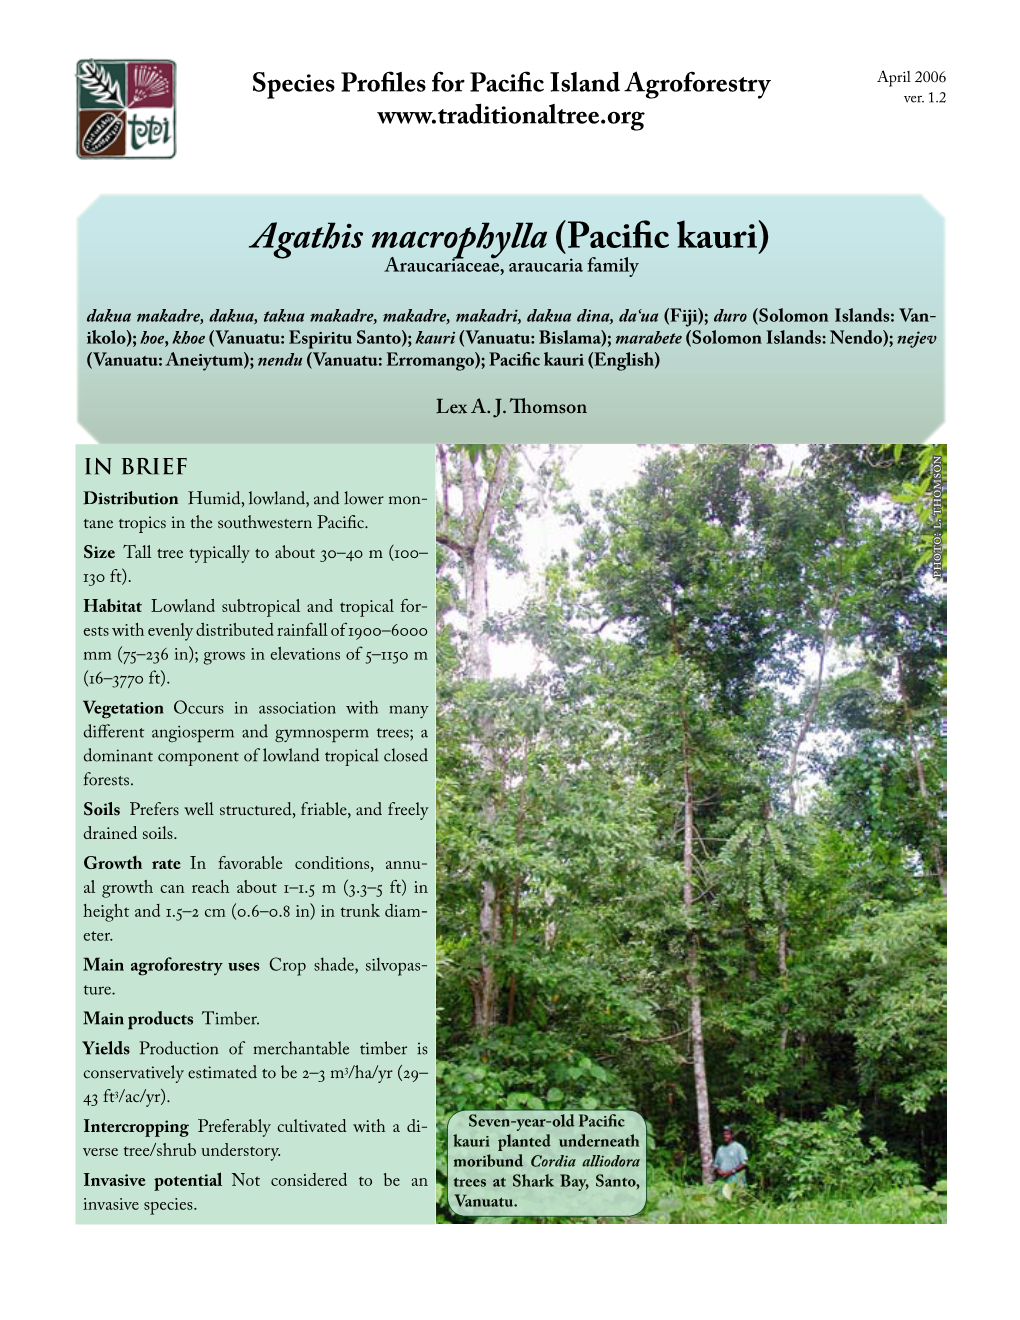 Agathis Macrophylla (Pacific Kauri)